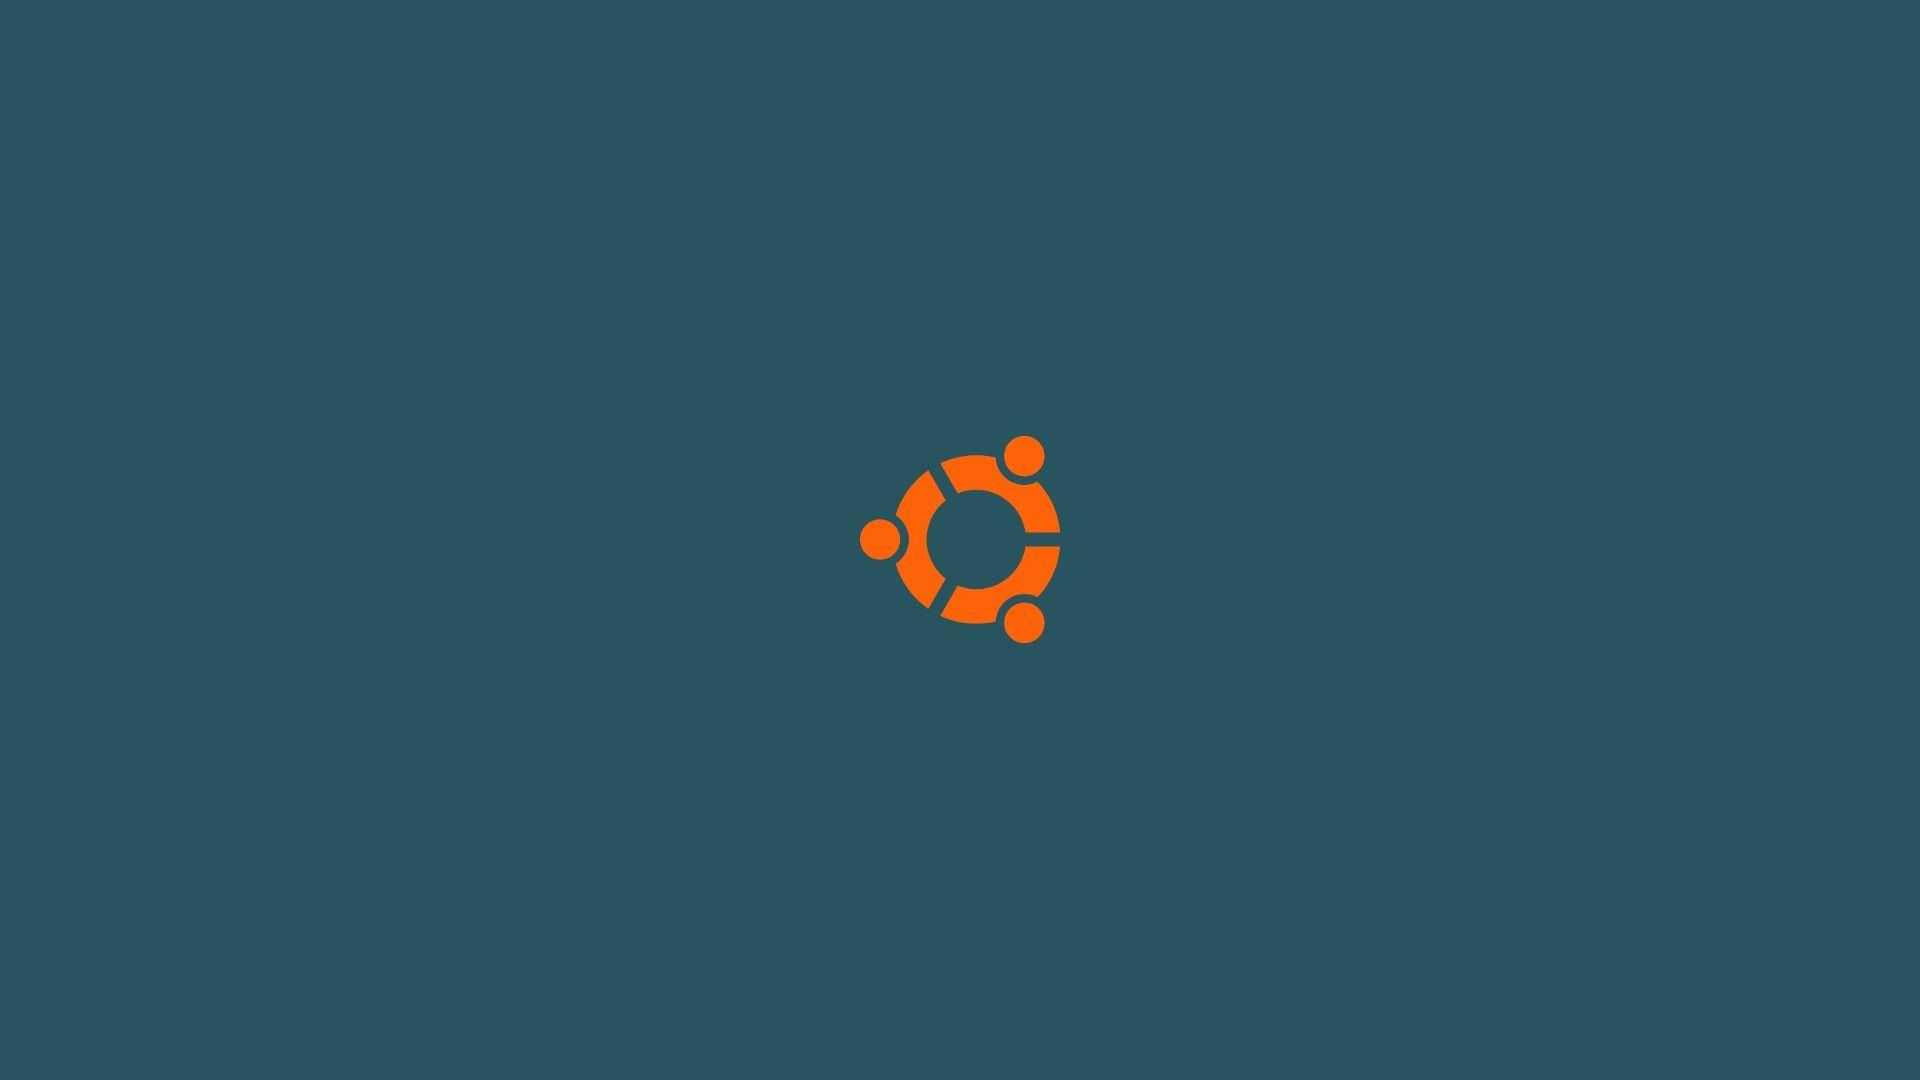 Linux Ubuntu Logo - Linux ubuntu logos simple background wallpaper | AllWallpaper.in ...